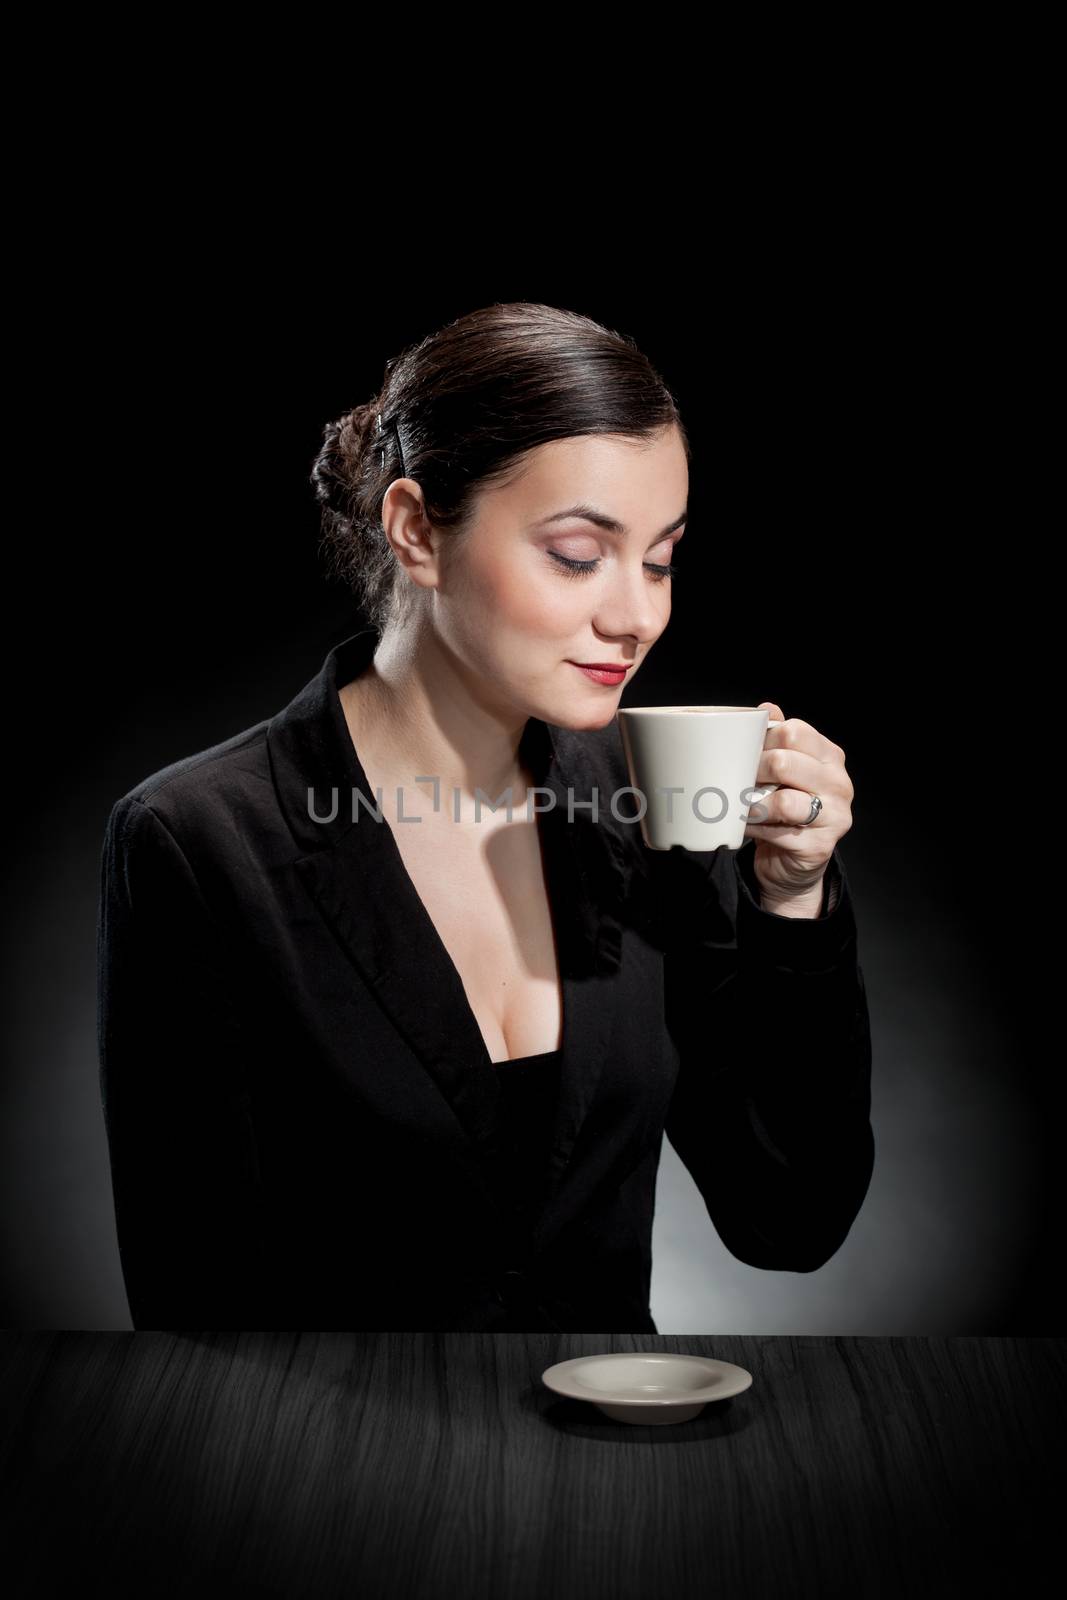 beautiful girl enjoying a cup of coffee on dark background